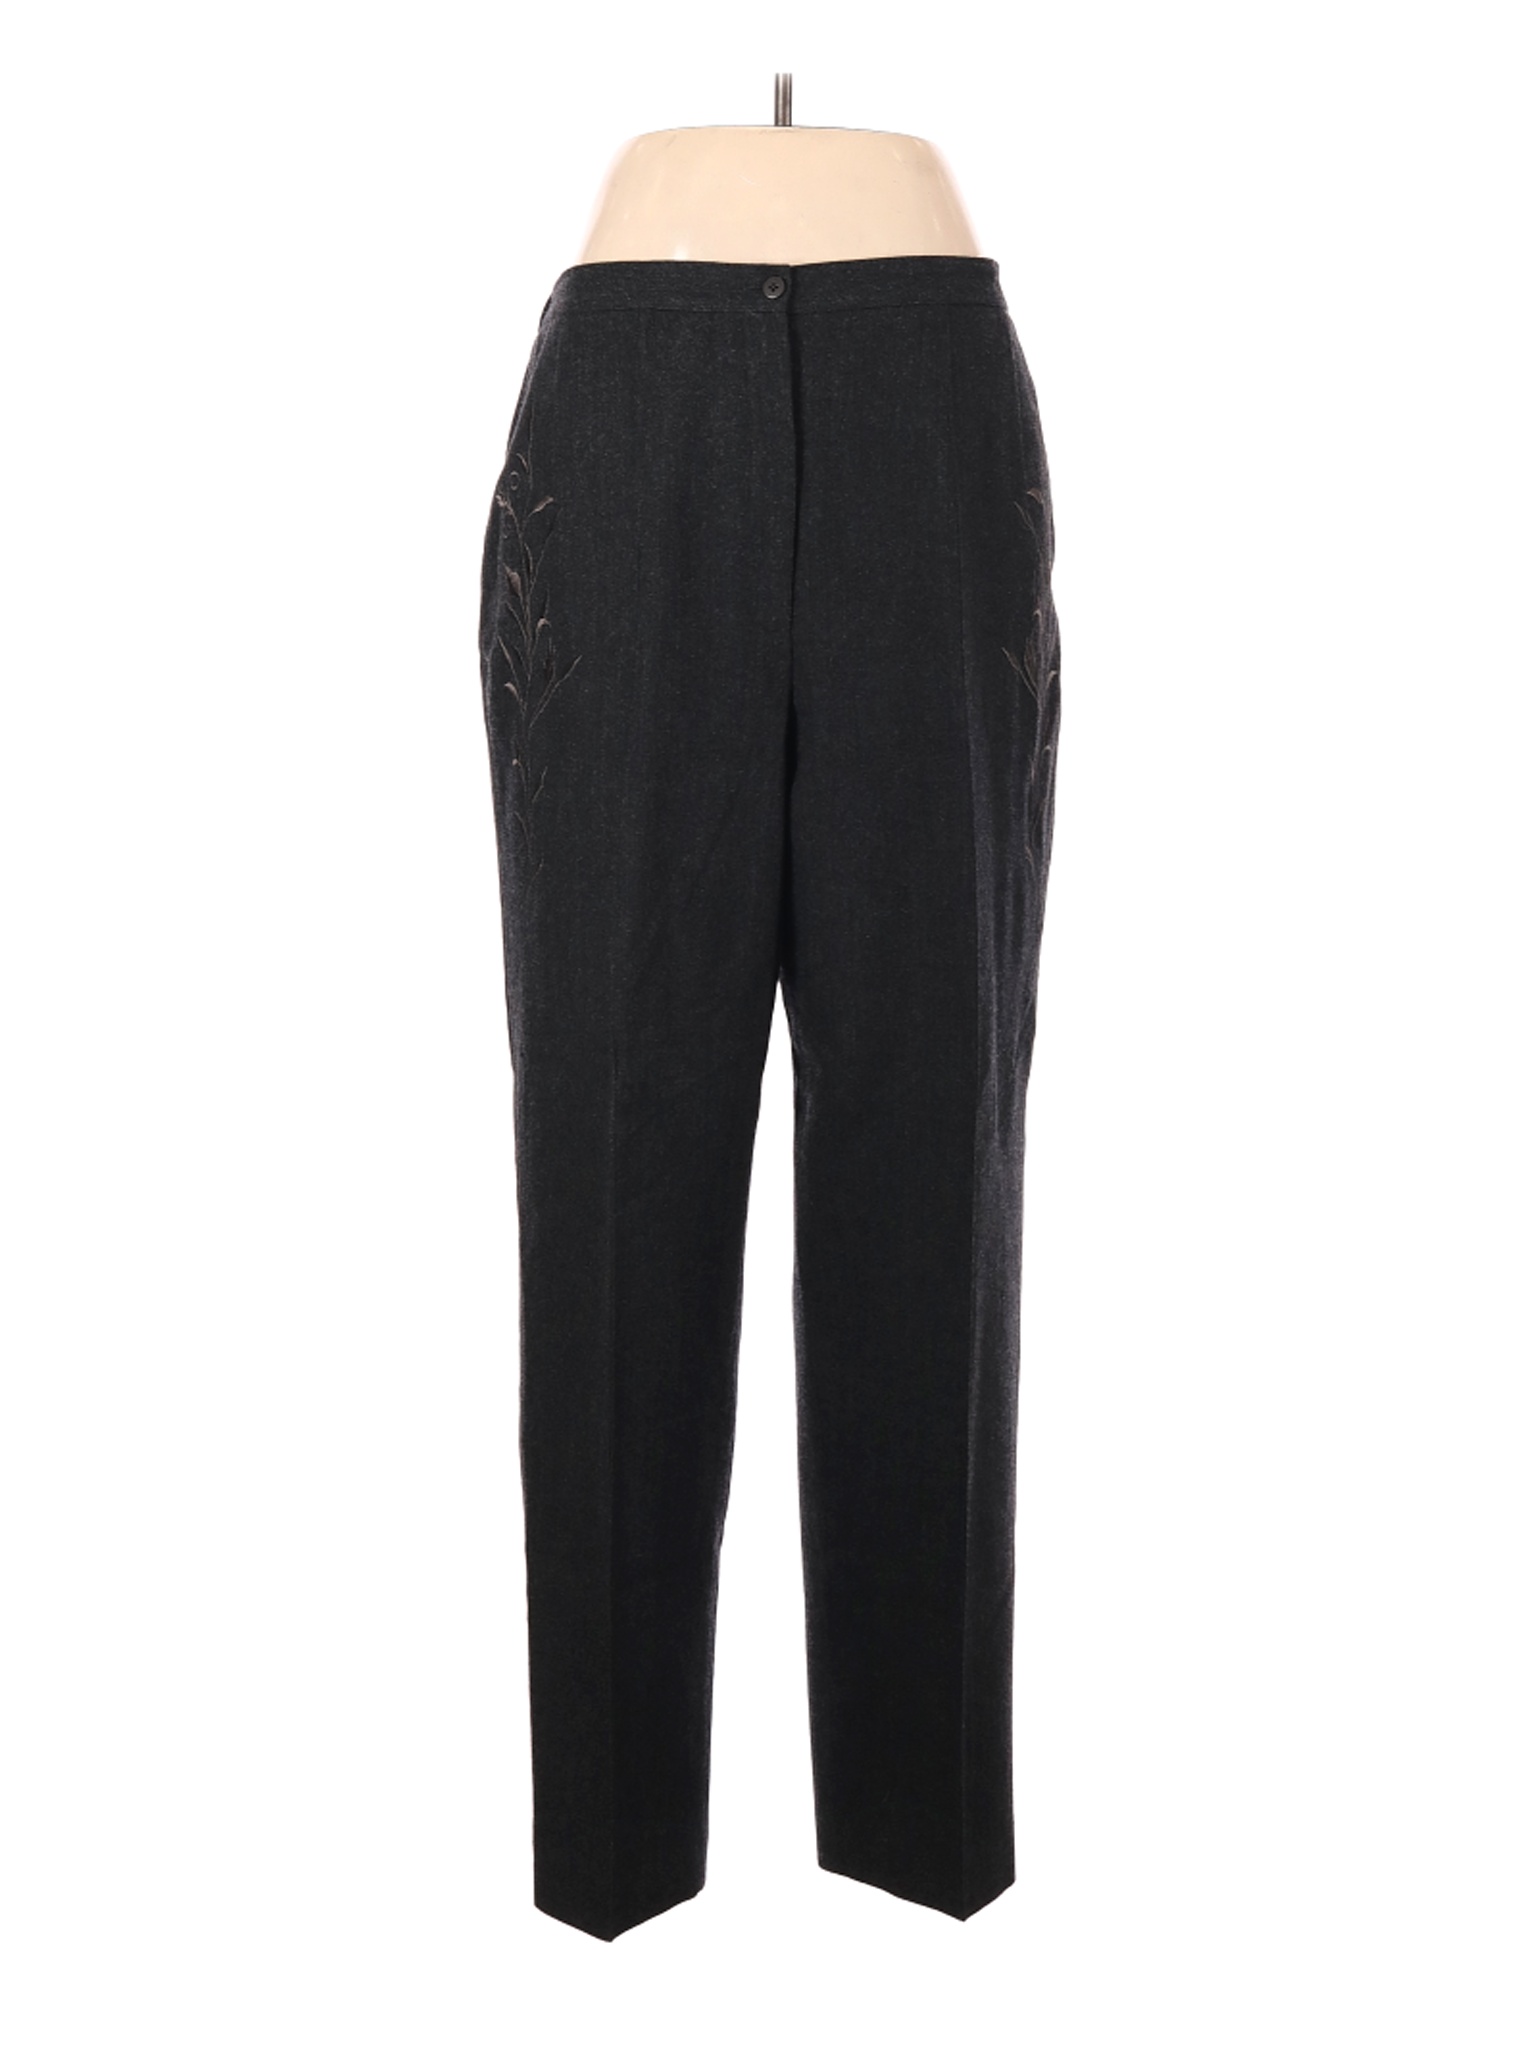 Harve Benard Women Black Wool Pants 16 | eBay